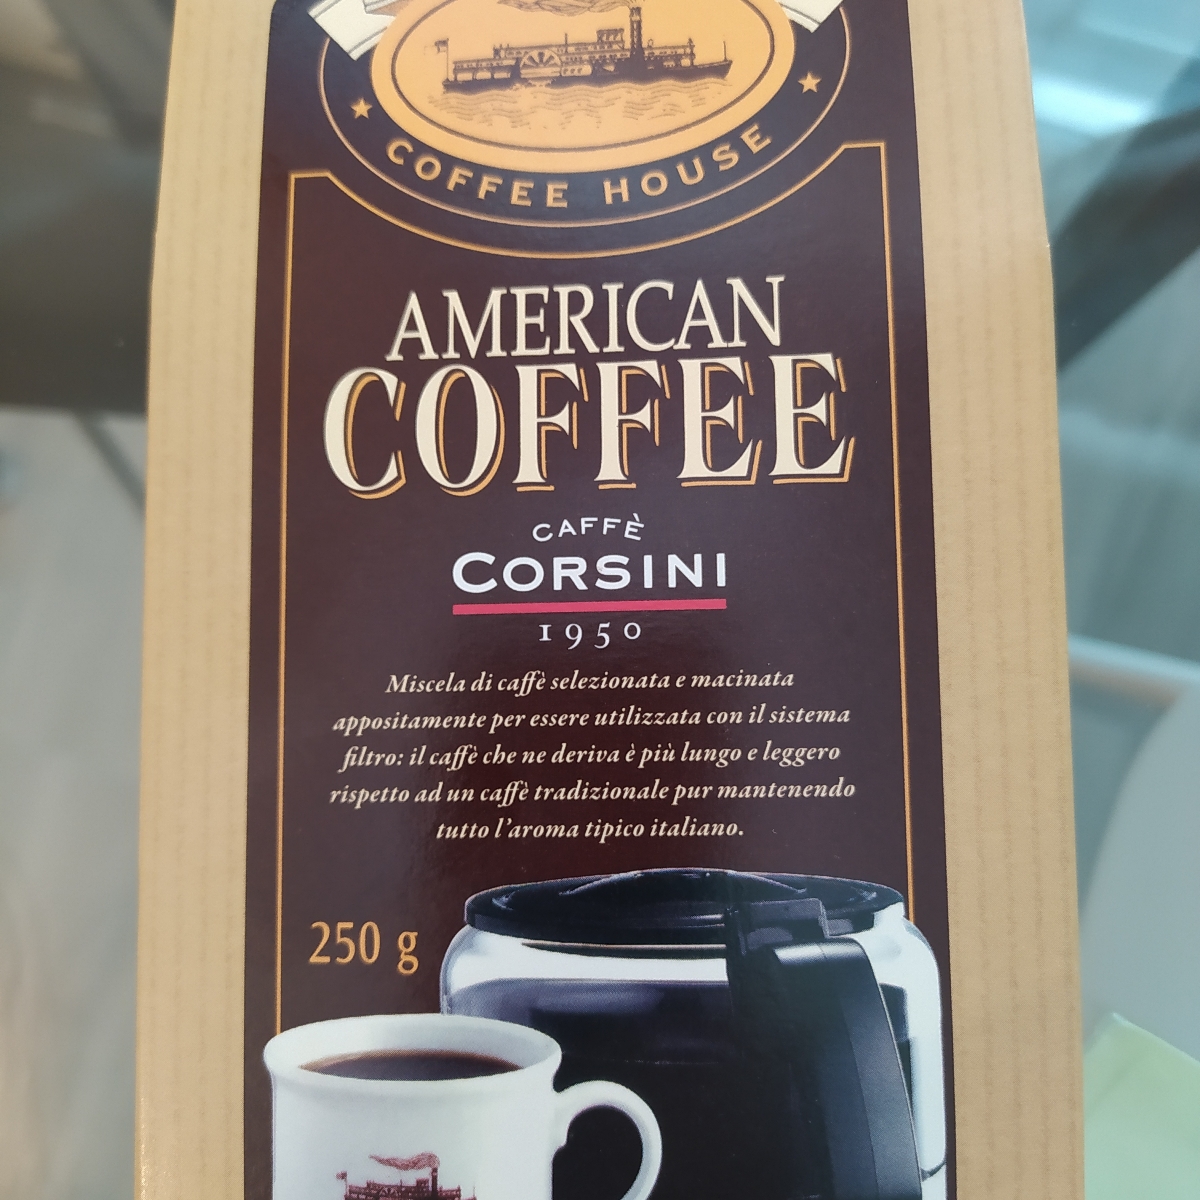 Corsini American coffee Reviews